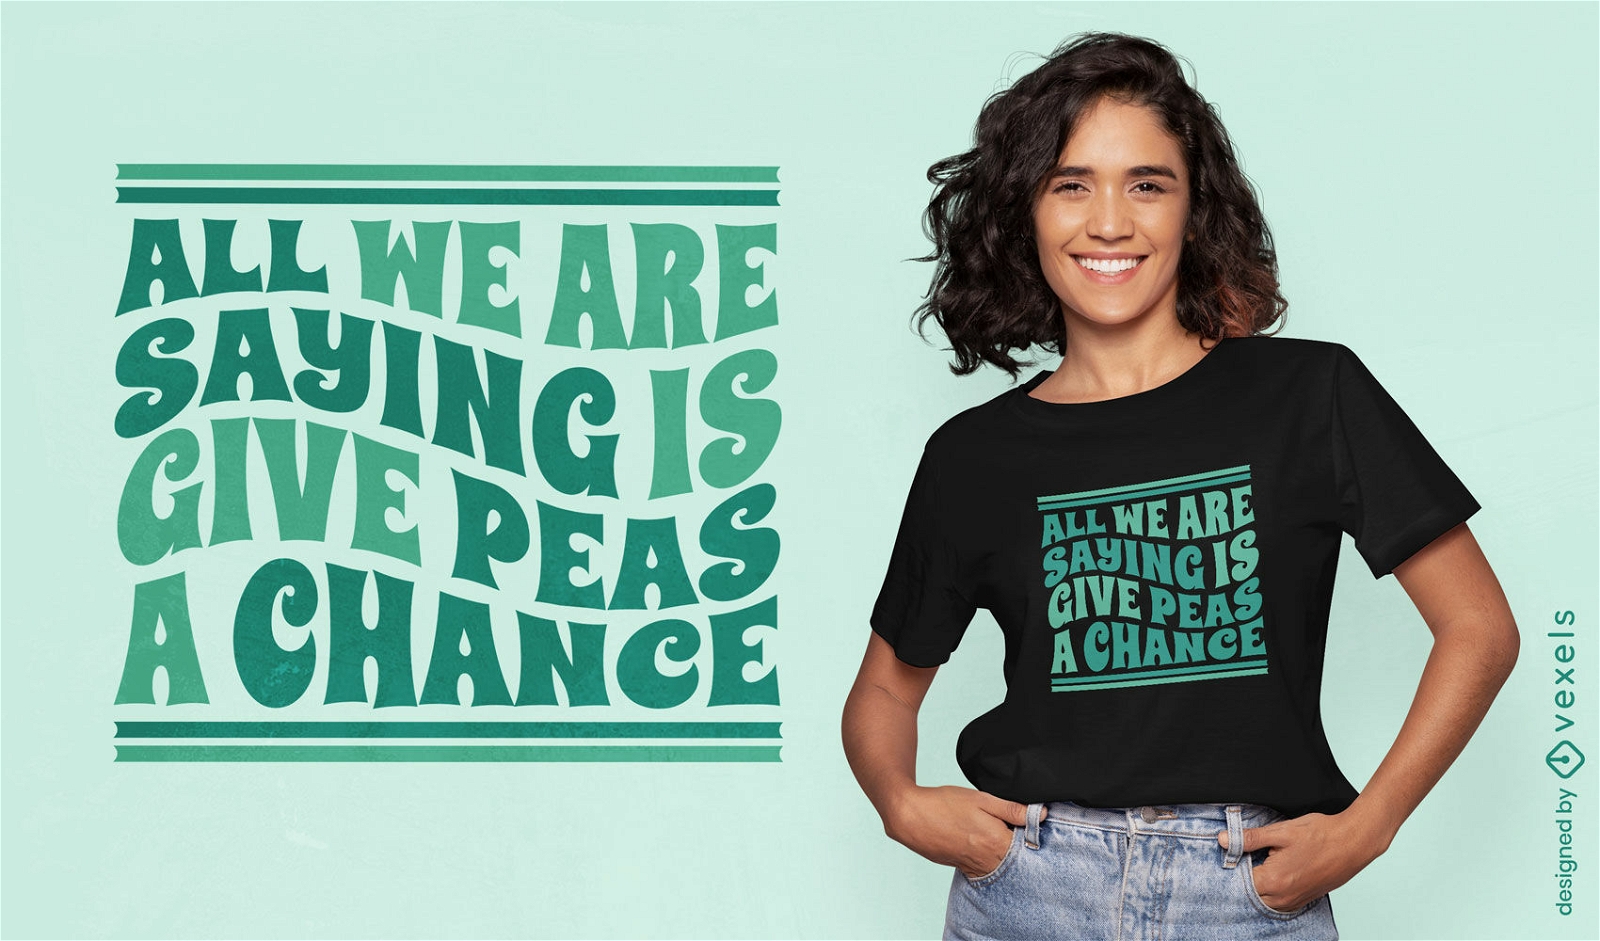 Give peas a chance t-shirt design